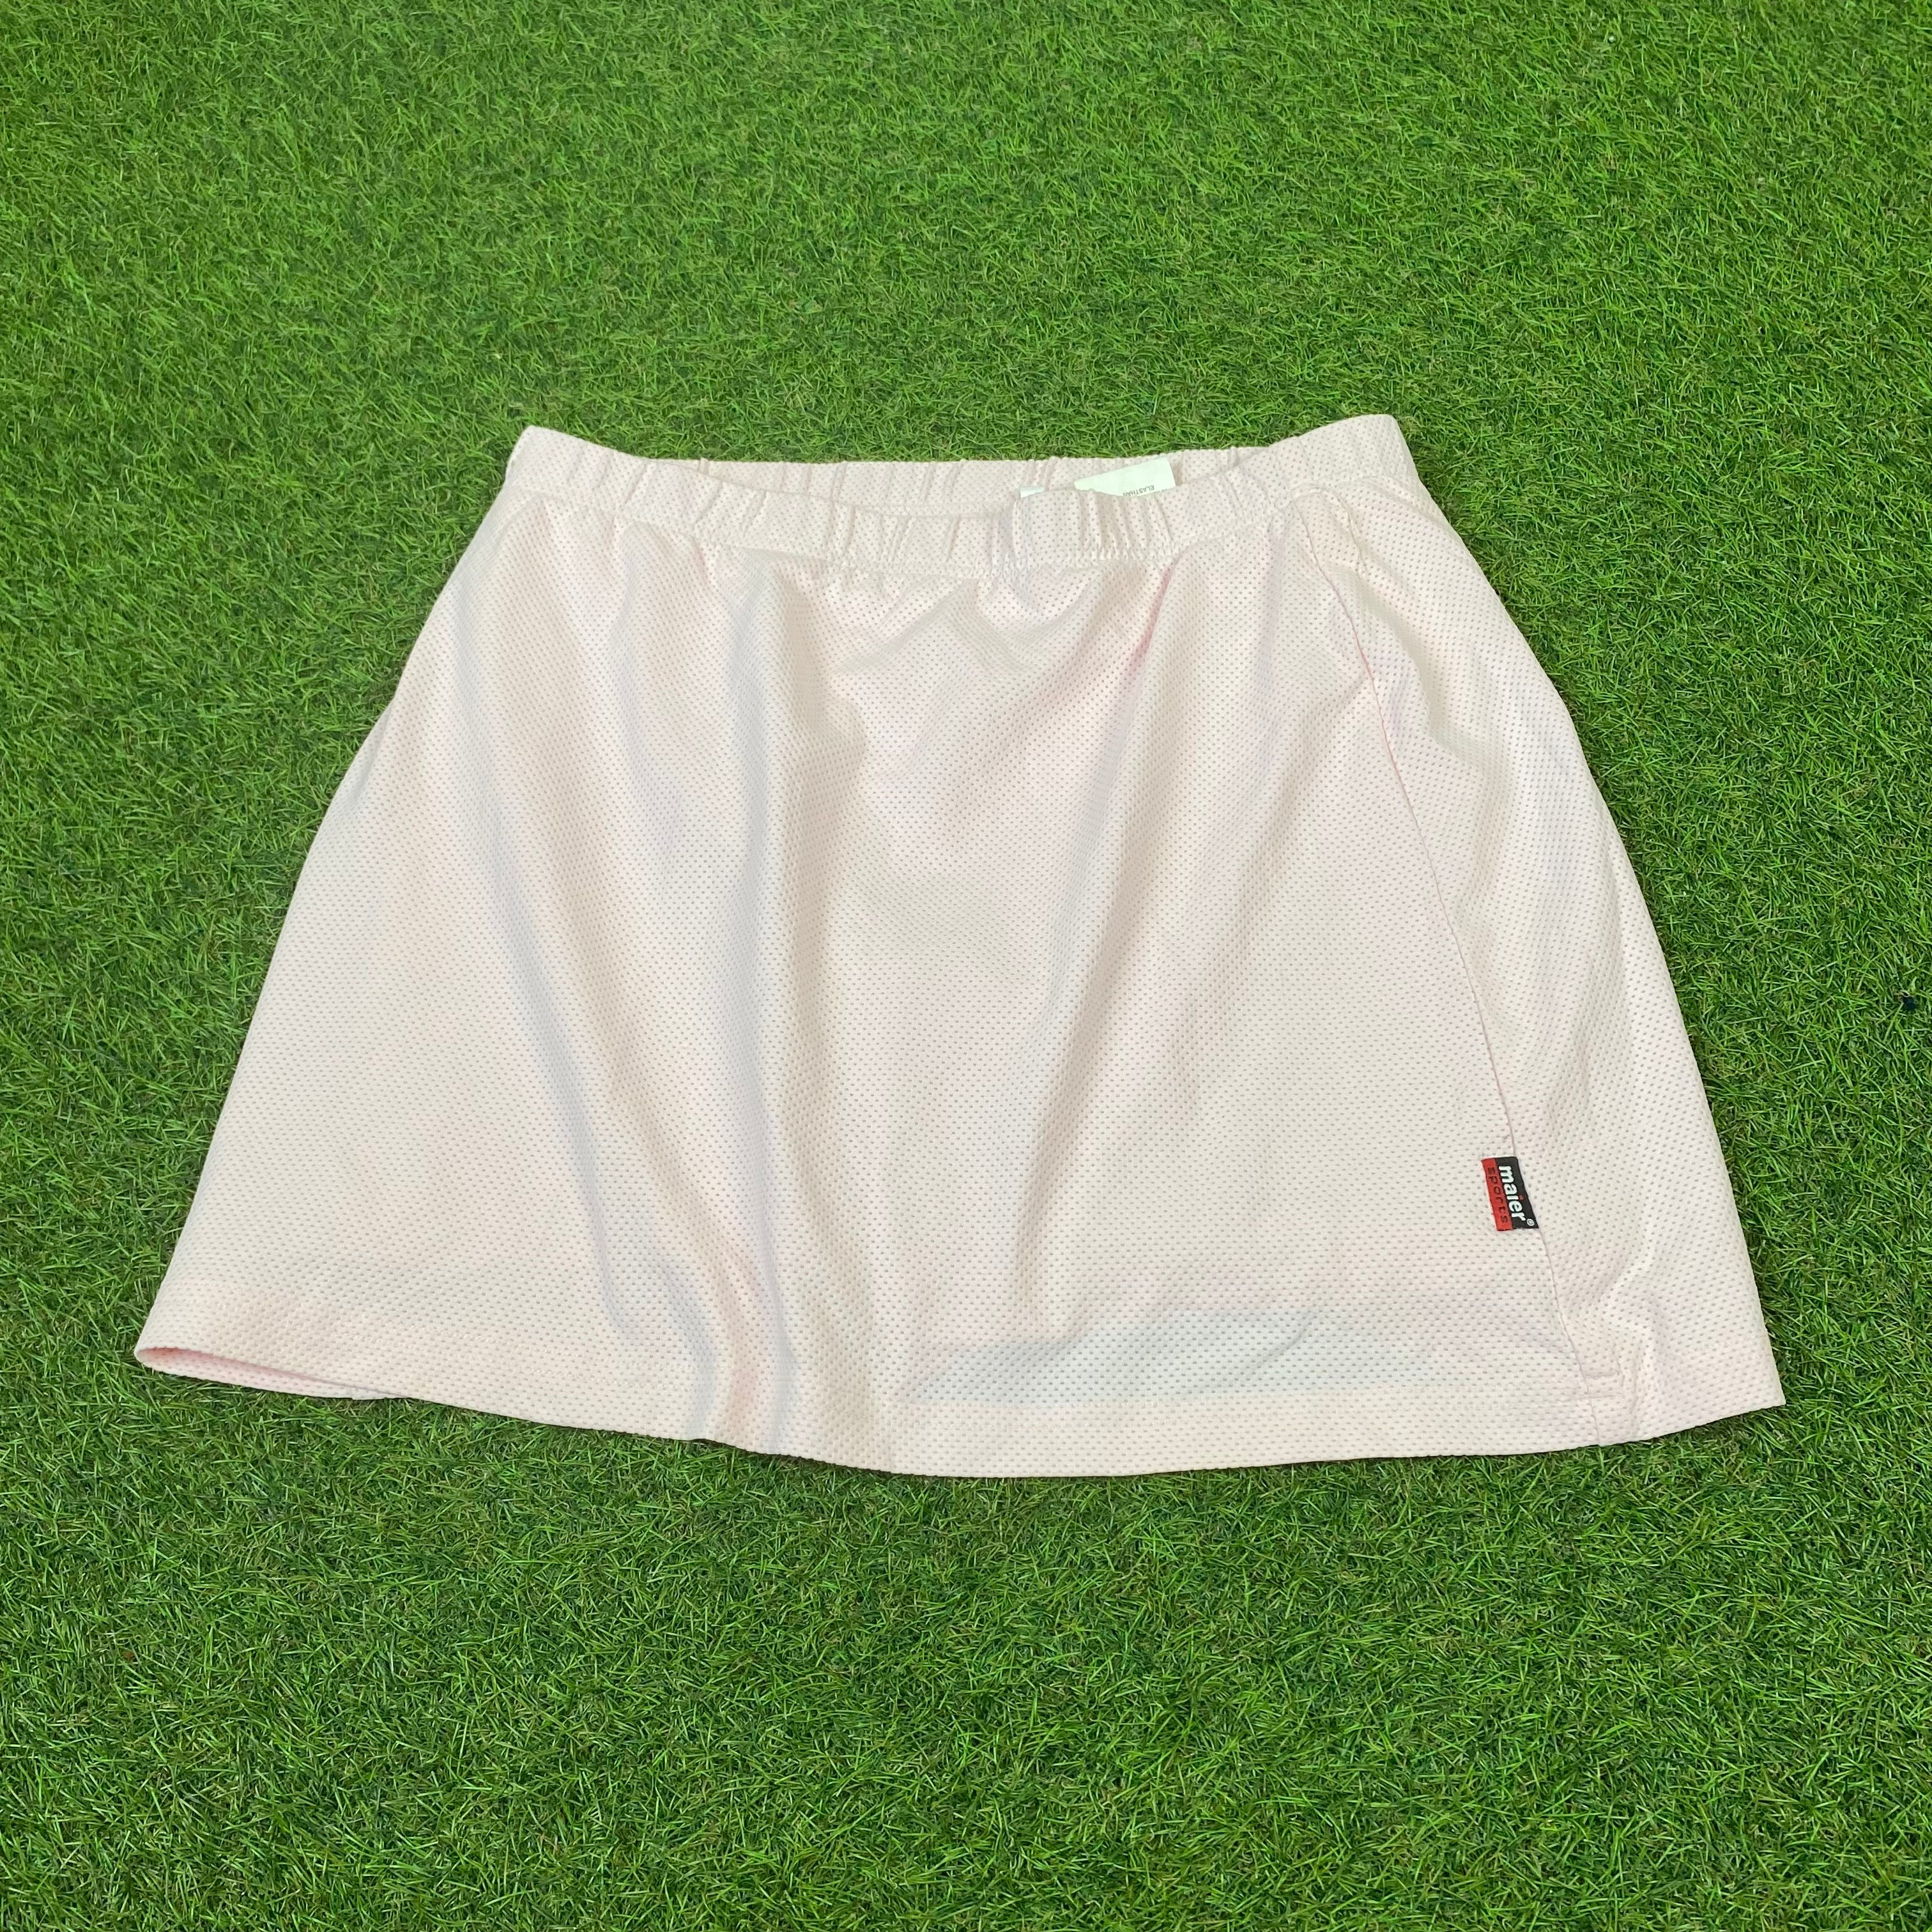 Maier Tennis Skirt Skort Pink Medium